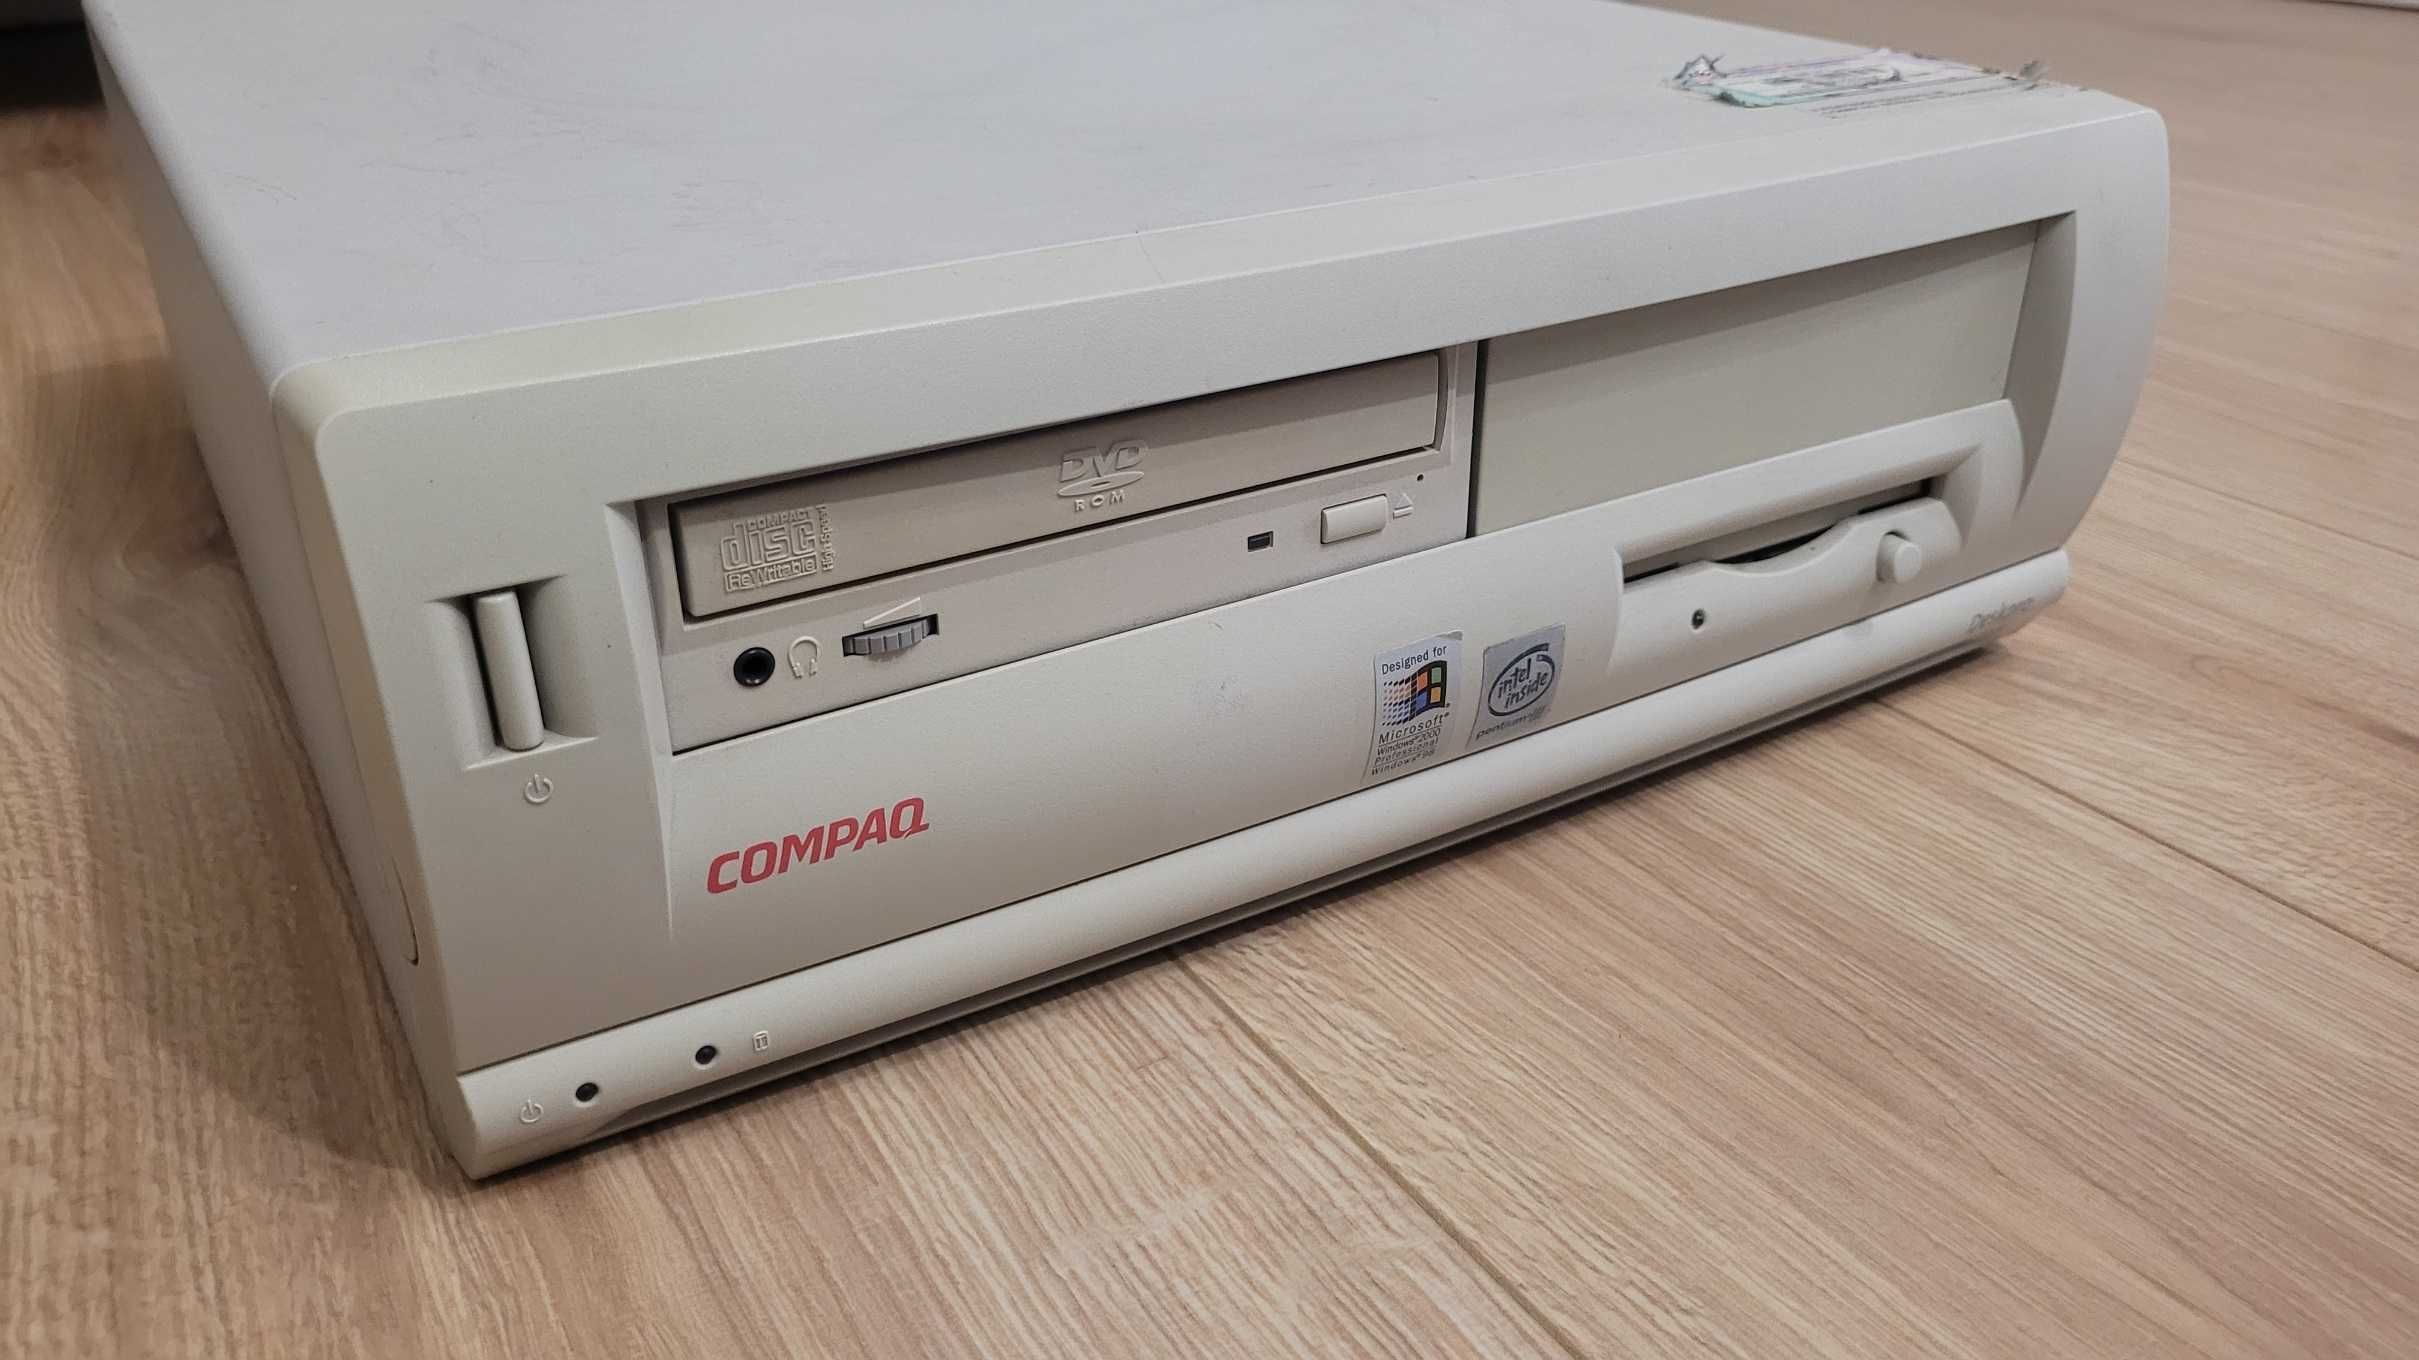 OKAZJA !! Compaq Deskpro Pentium III 800MHz 512MB 20GB sprawny klasyk